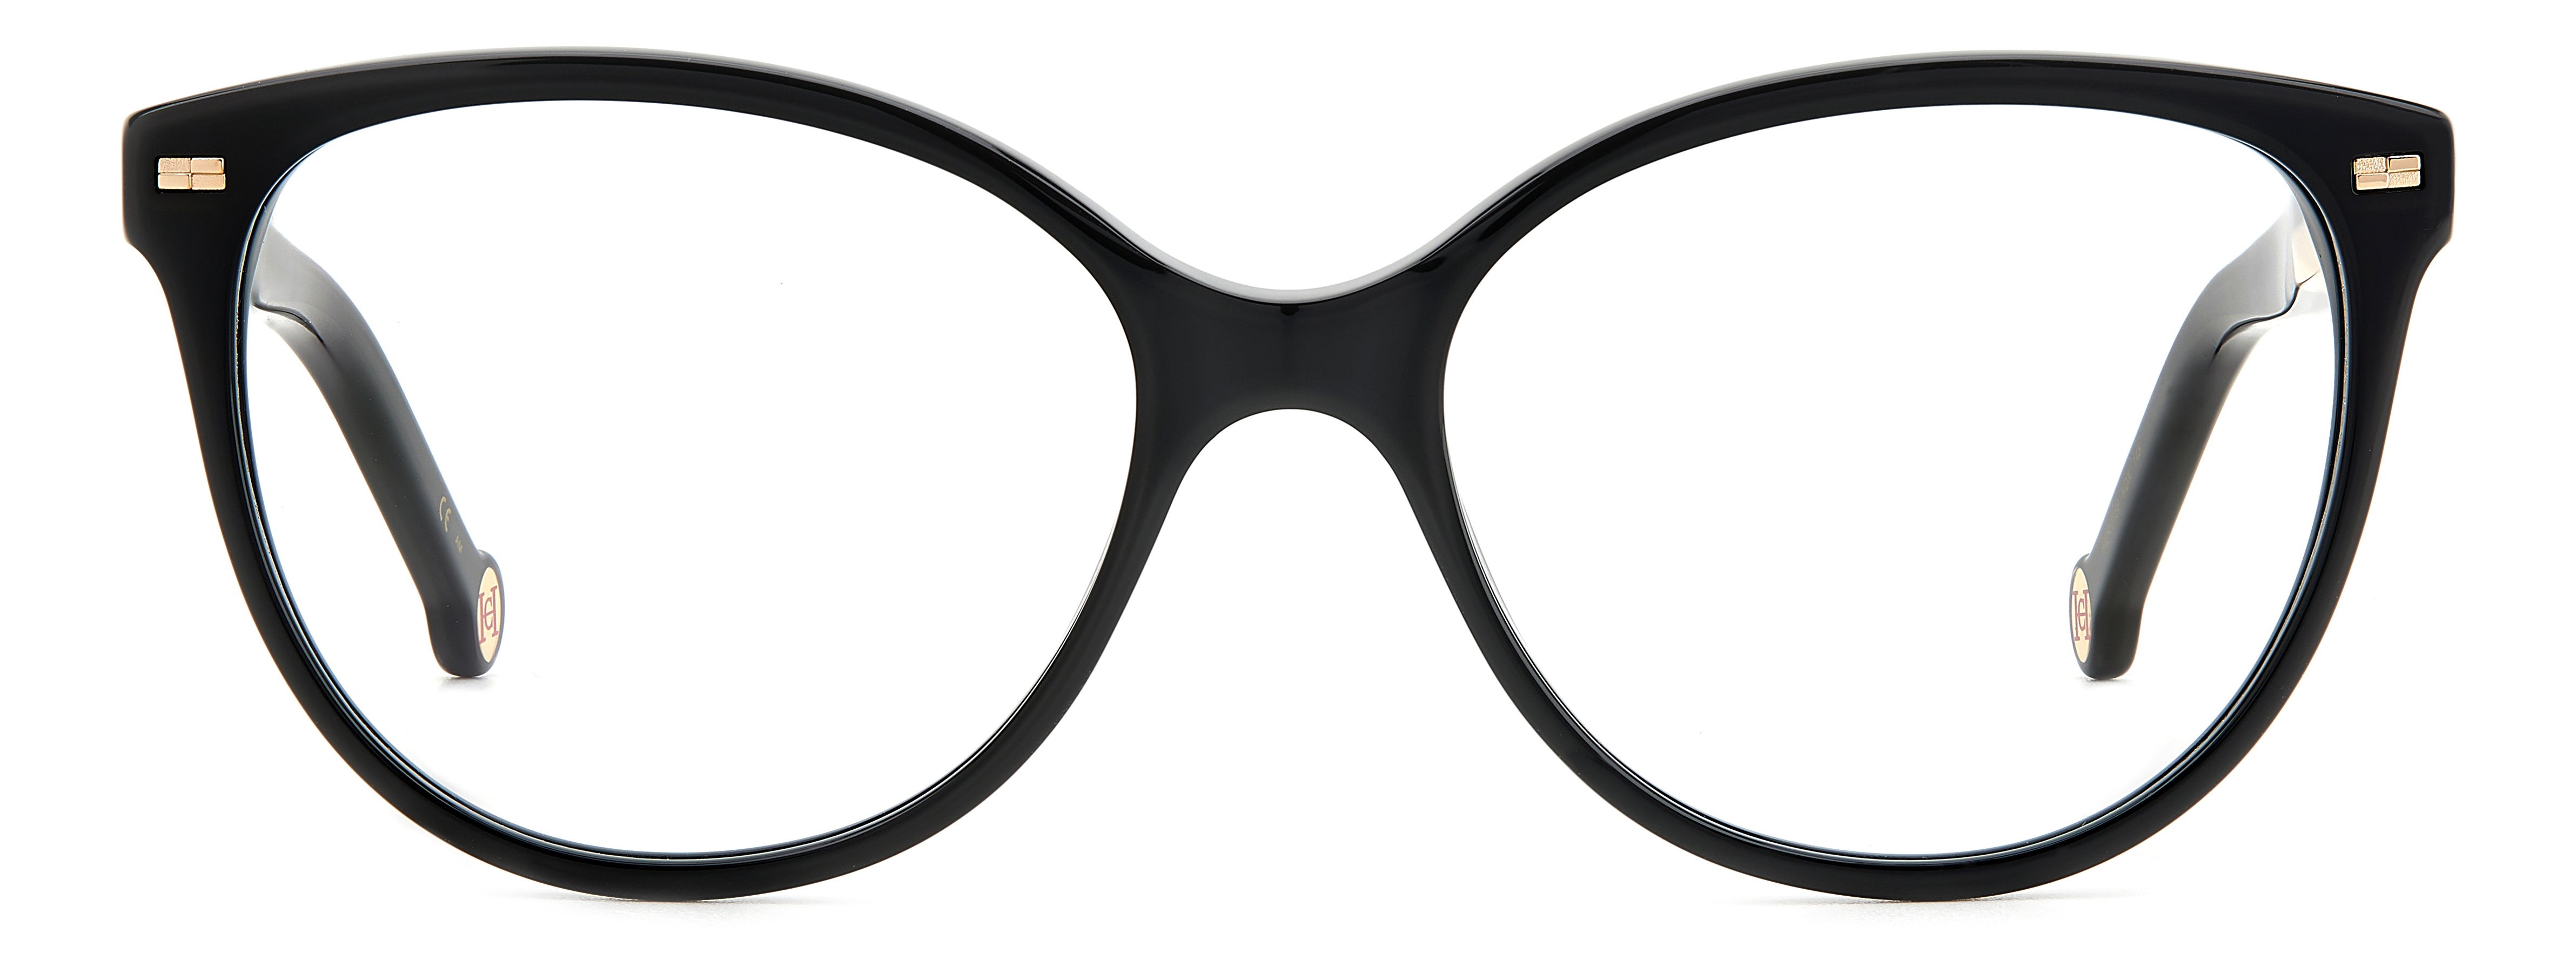 Sunglasses,specsmart, spec smart, glasses, eye glasses glasses frames, where to get glasses in lagos, eye treatment, wellness health care group, caeolina herrera HER 0158